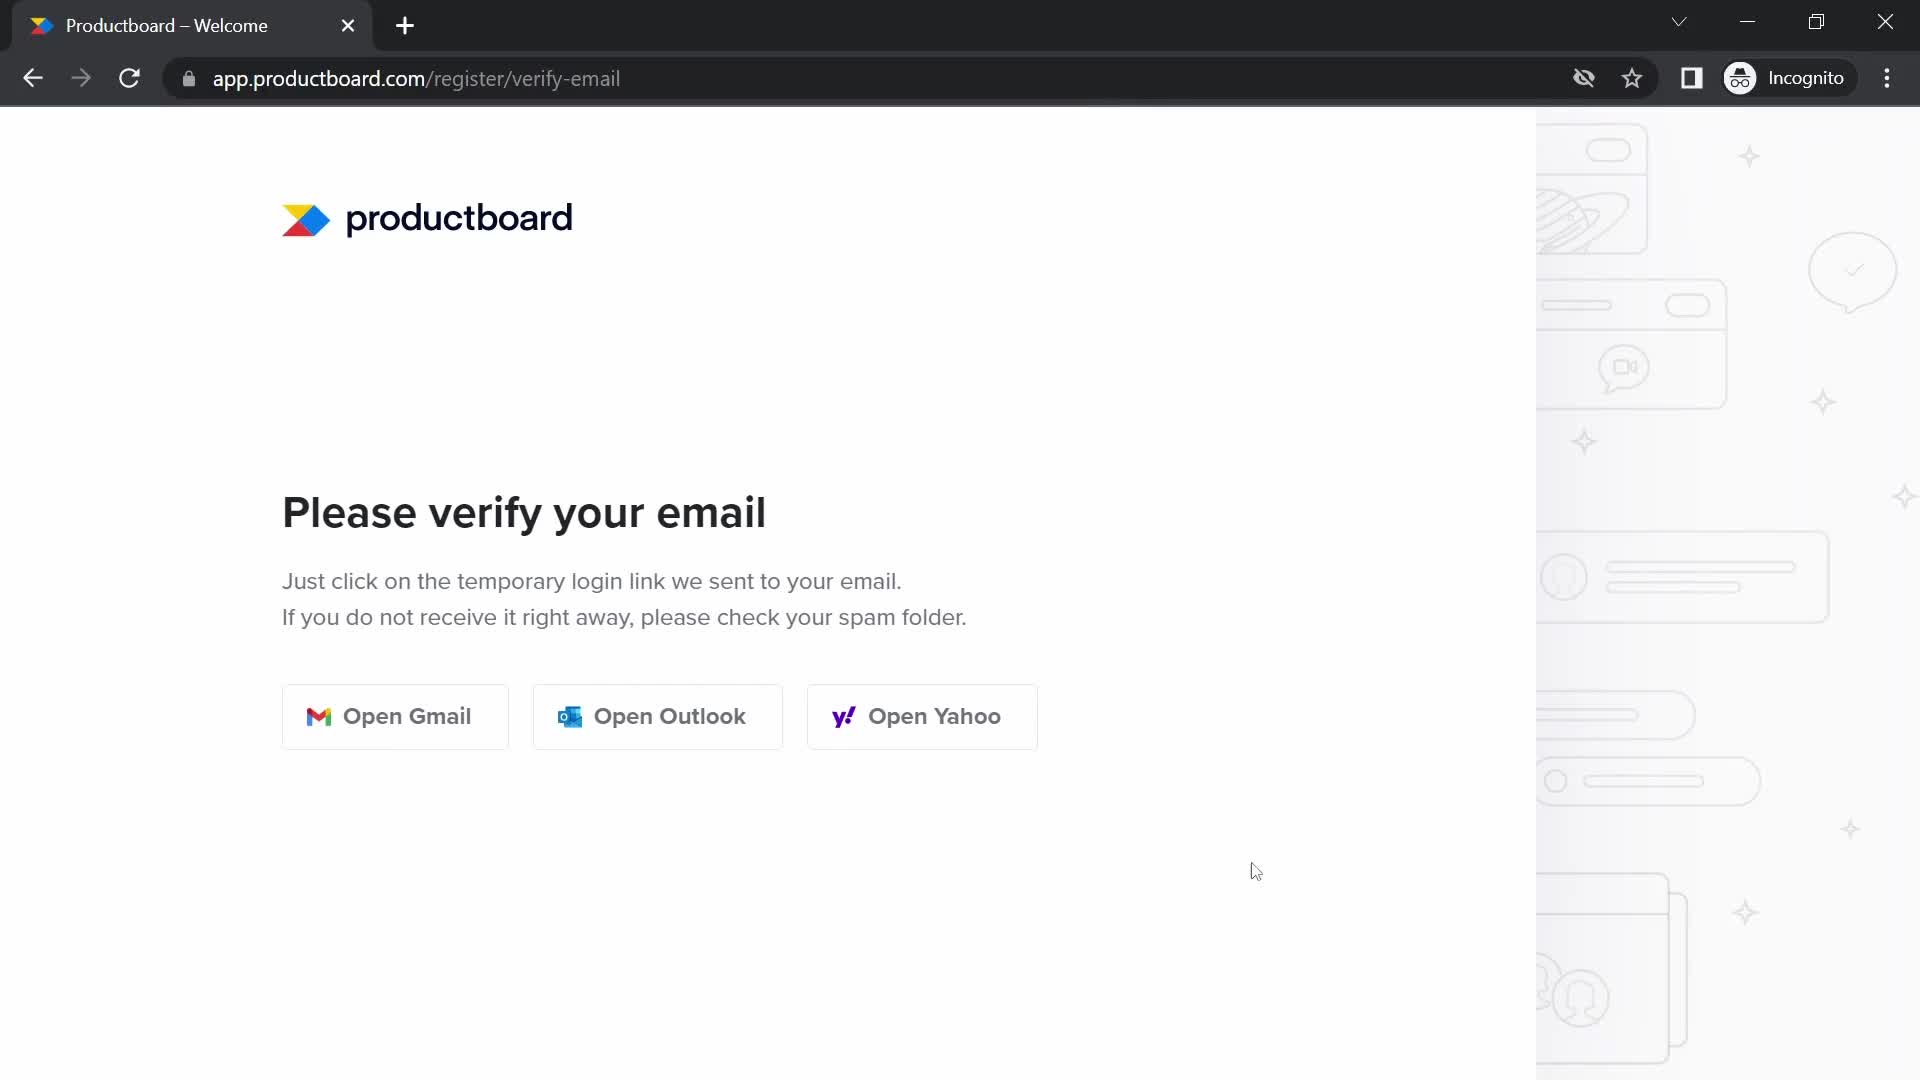 Productboard check your inbox screenshot